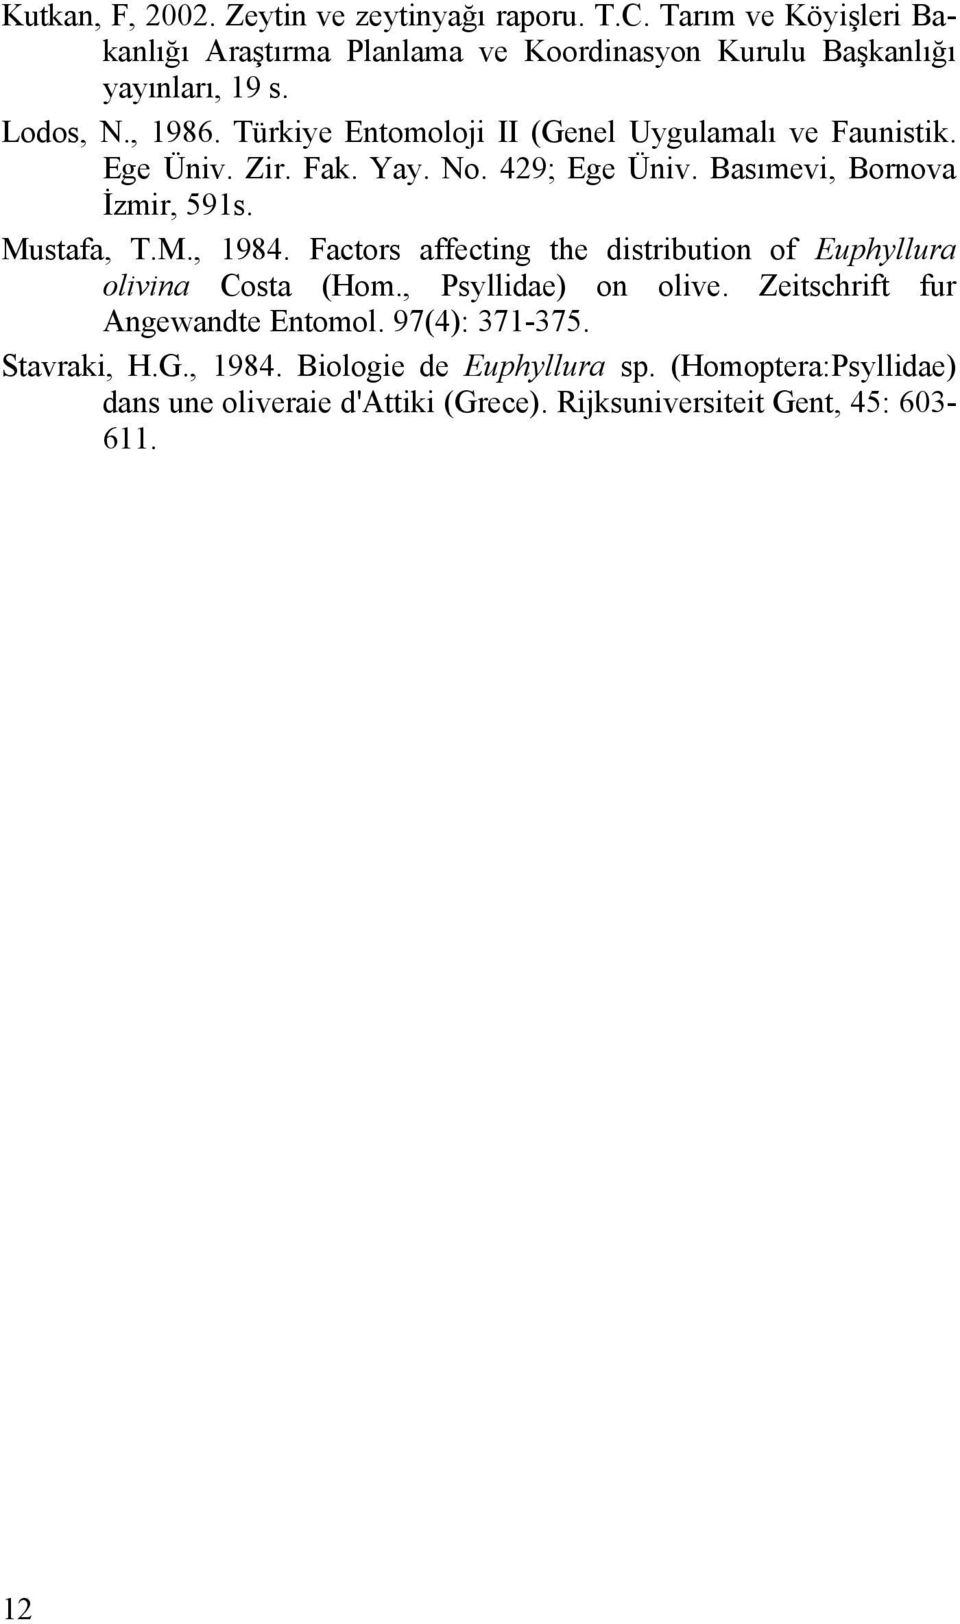 Mustafa, T.M., 9. Factors affecting the distribution of Euphyllura olivina Costa (Hom., Psyllidae) on olive. Zeitschrift fur Angewandte Entomol.